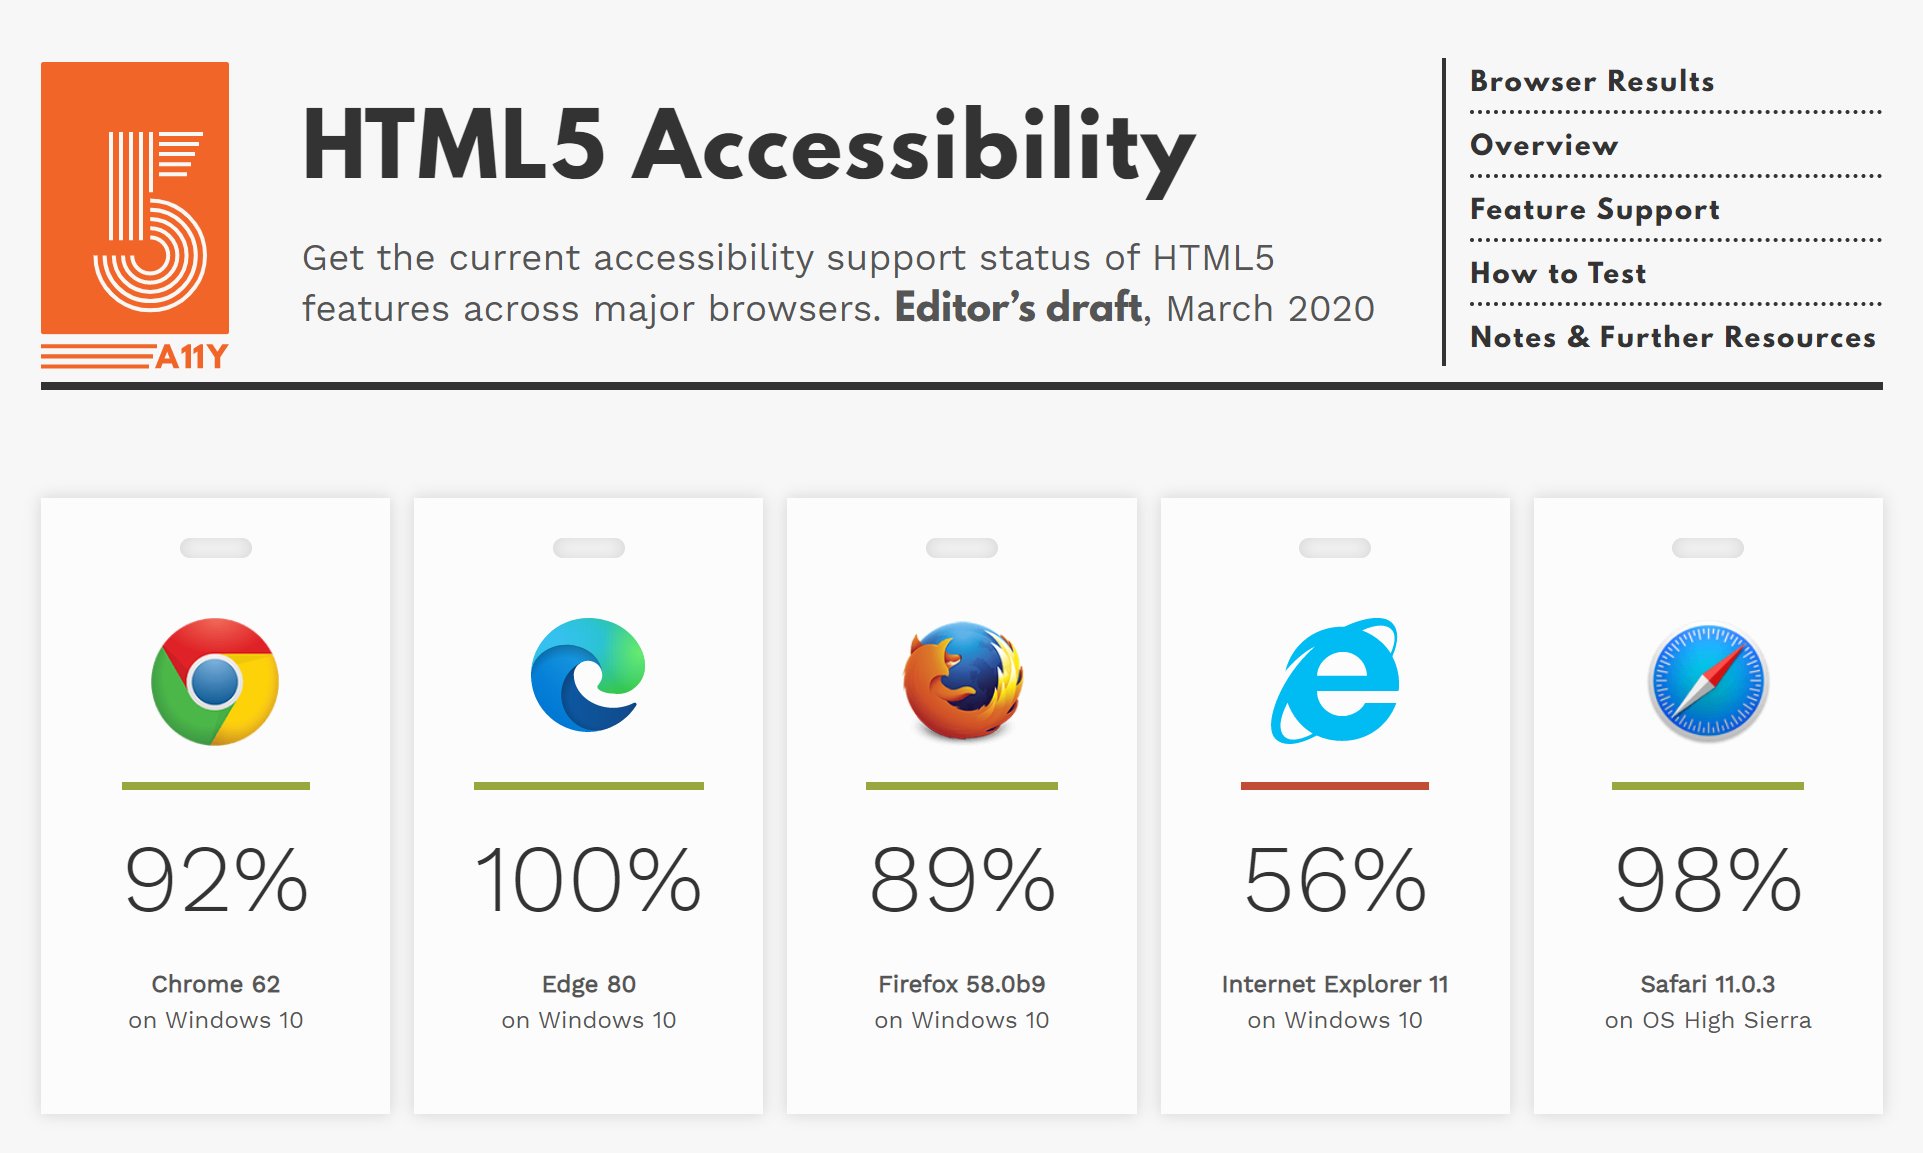 Microsoft celebrates Edge hitting a 100% HTML5 Accessibility score